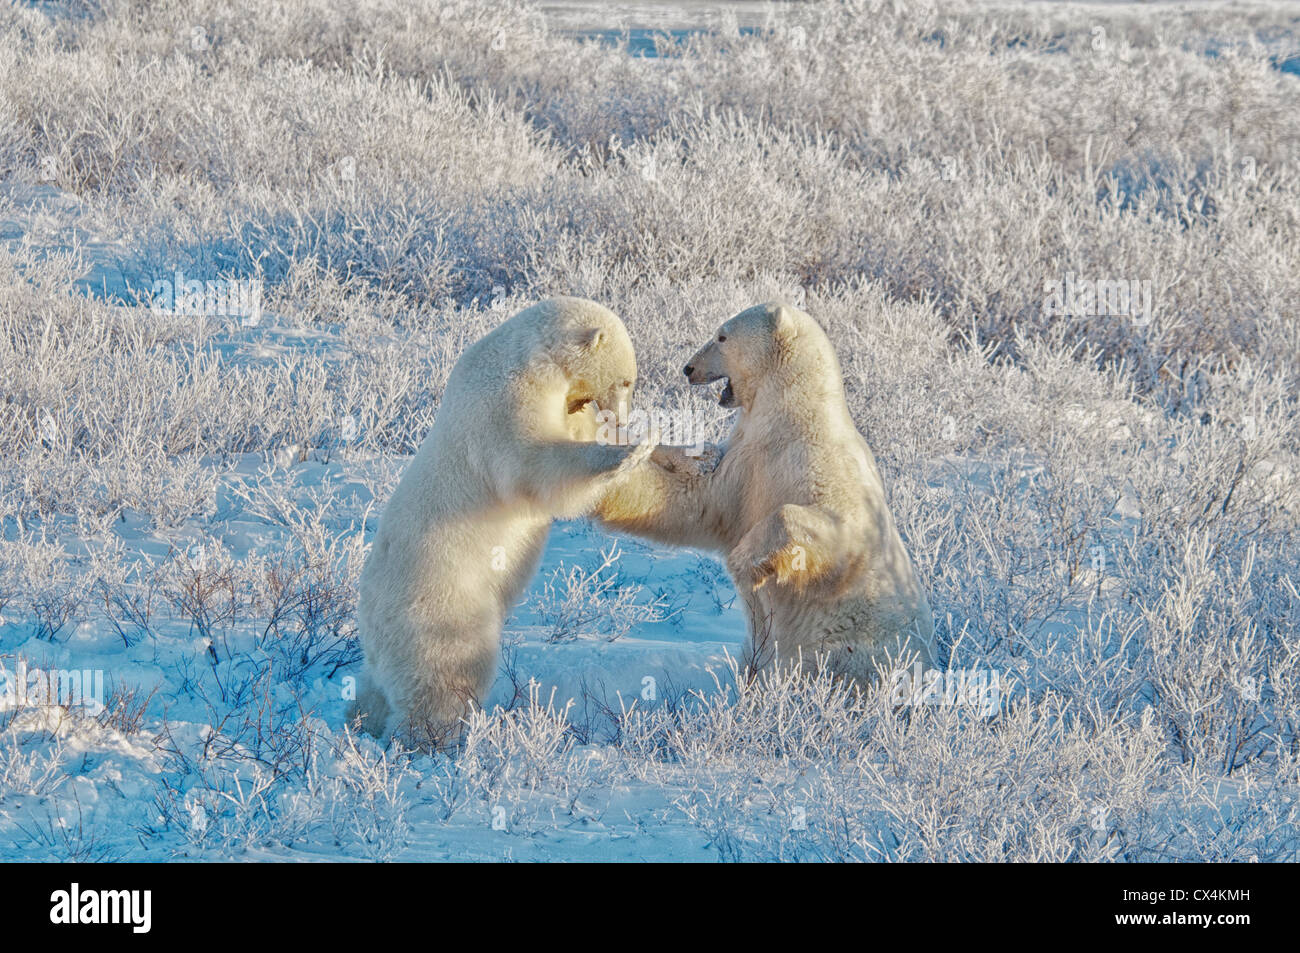 Polar Bears, Ursus maritimus, play fighting in the frost, early morning light near Hudson Bay, Cape Churchill, Manitoba, Canada Stock Photo